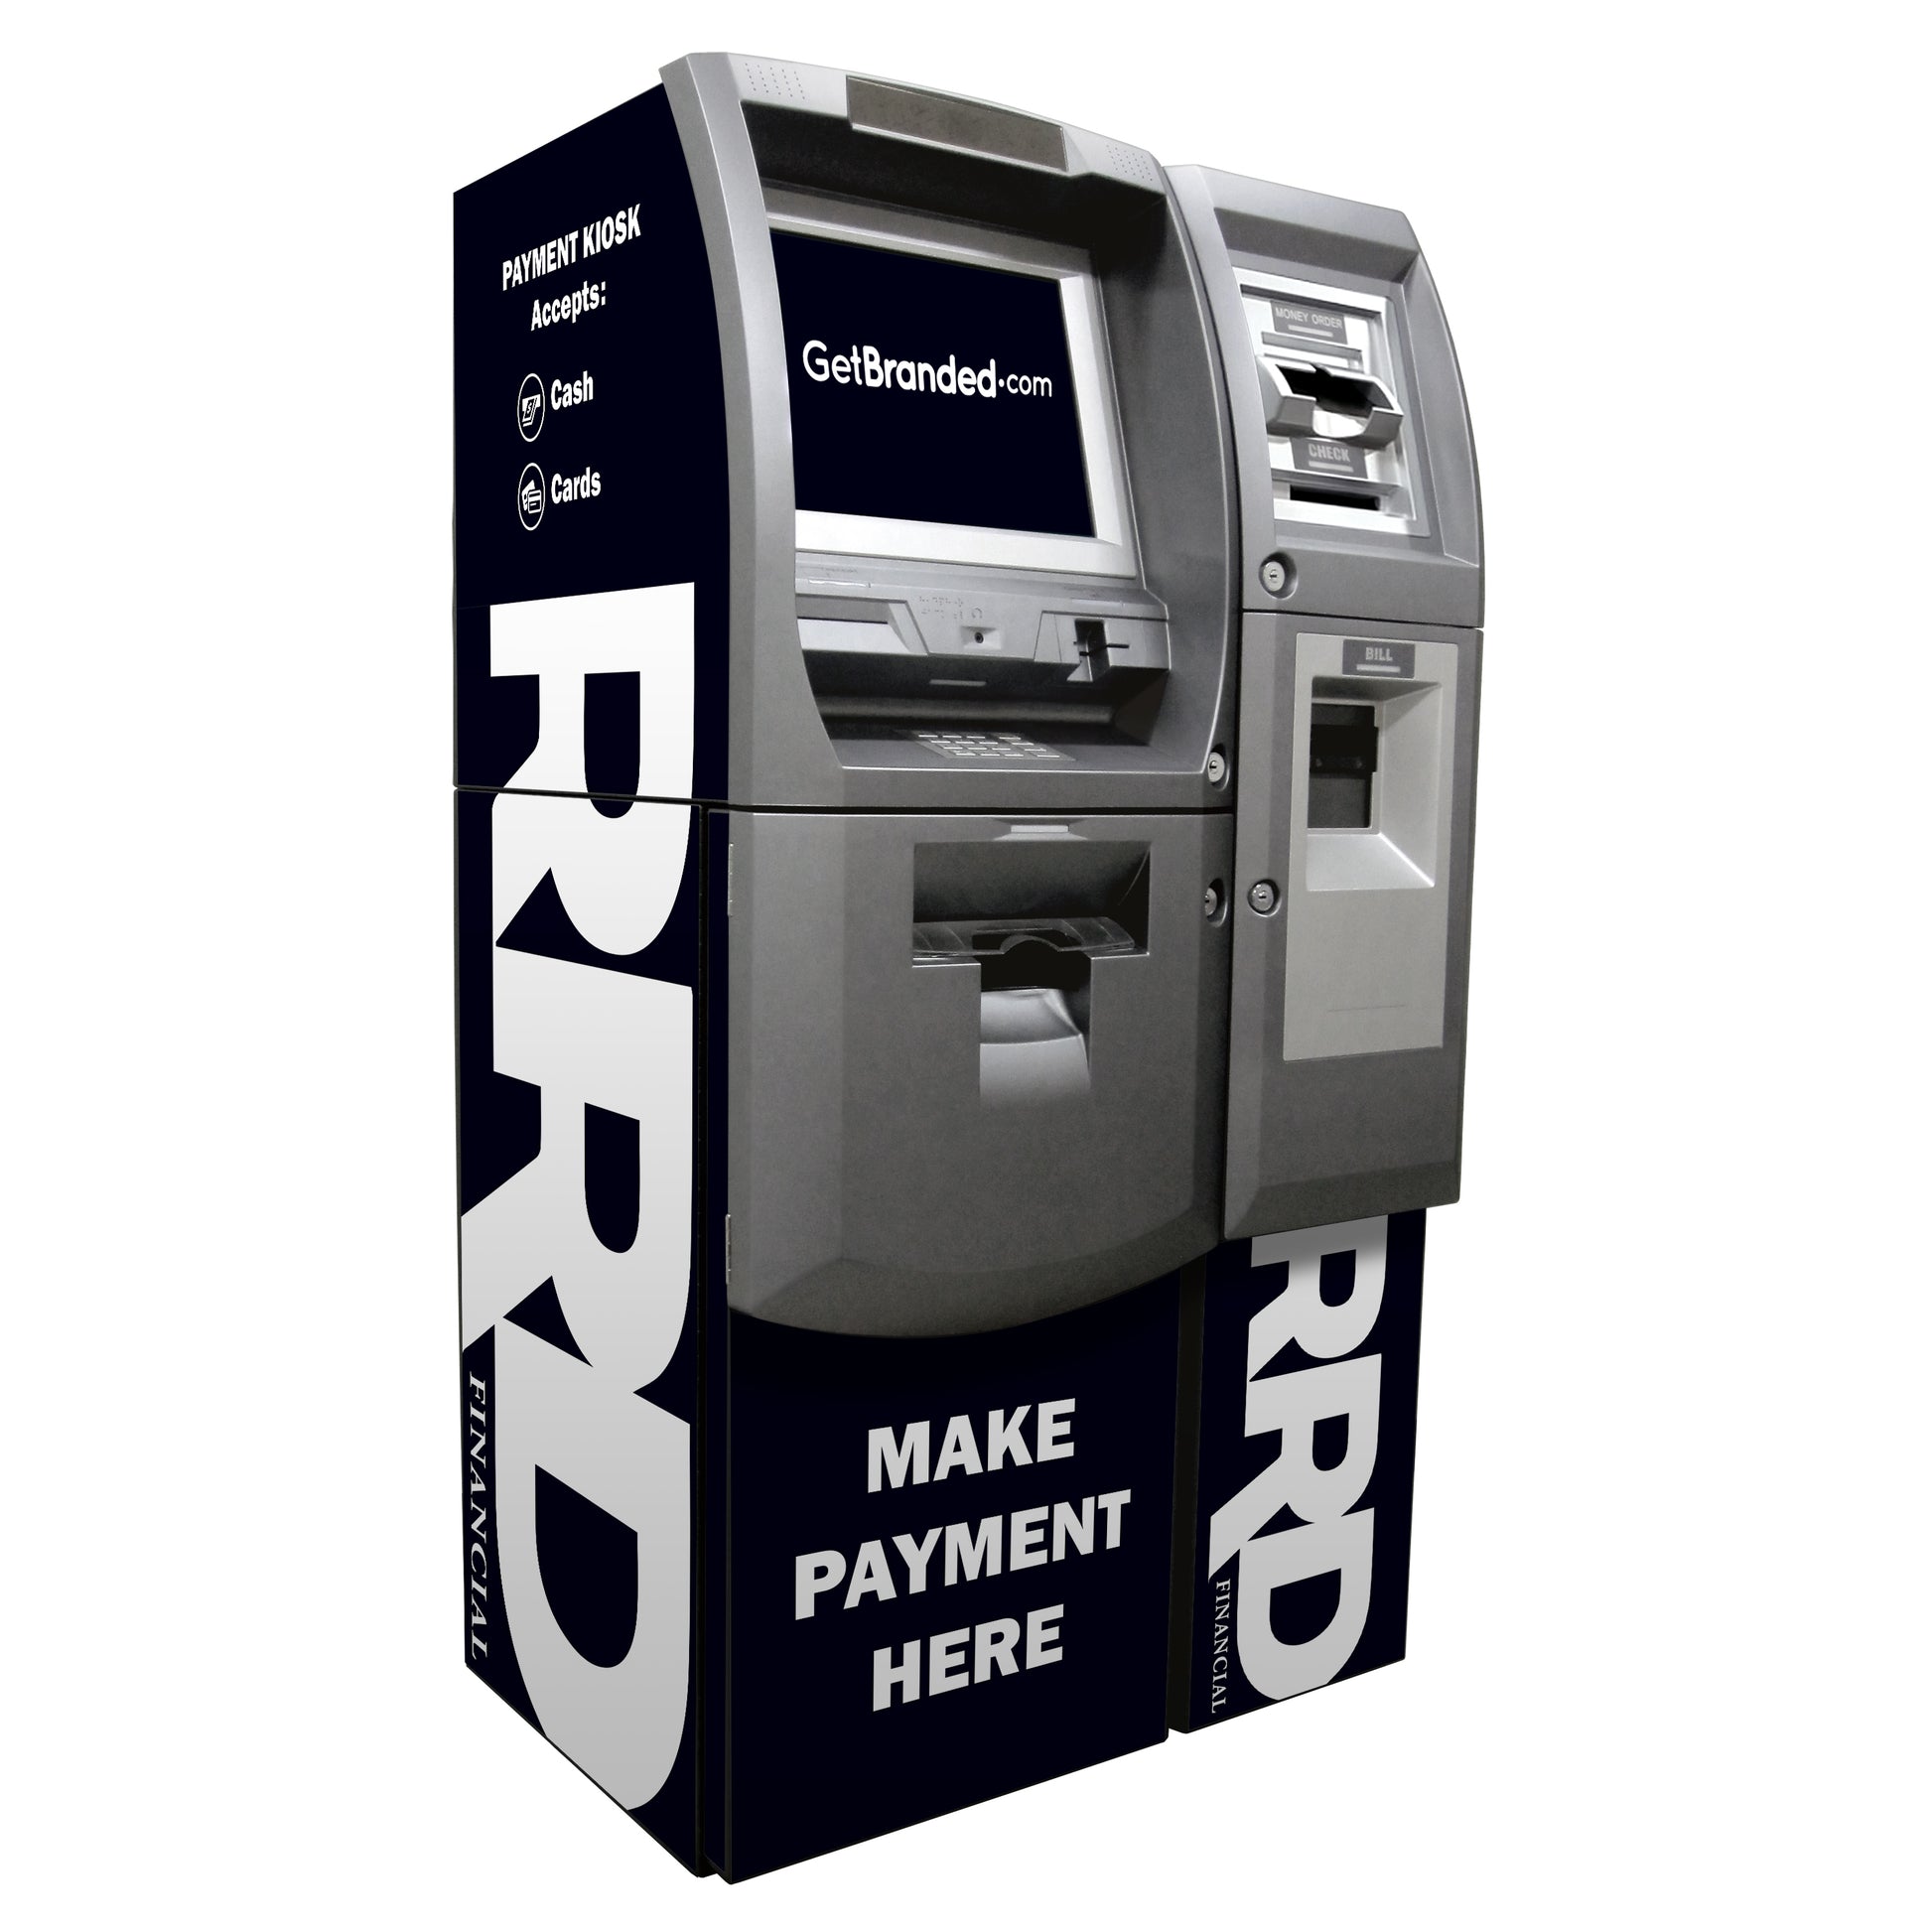 Genmega 6000 SharkSkin® ATM Wrap With Sidecar Rendering.